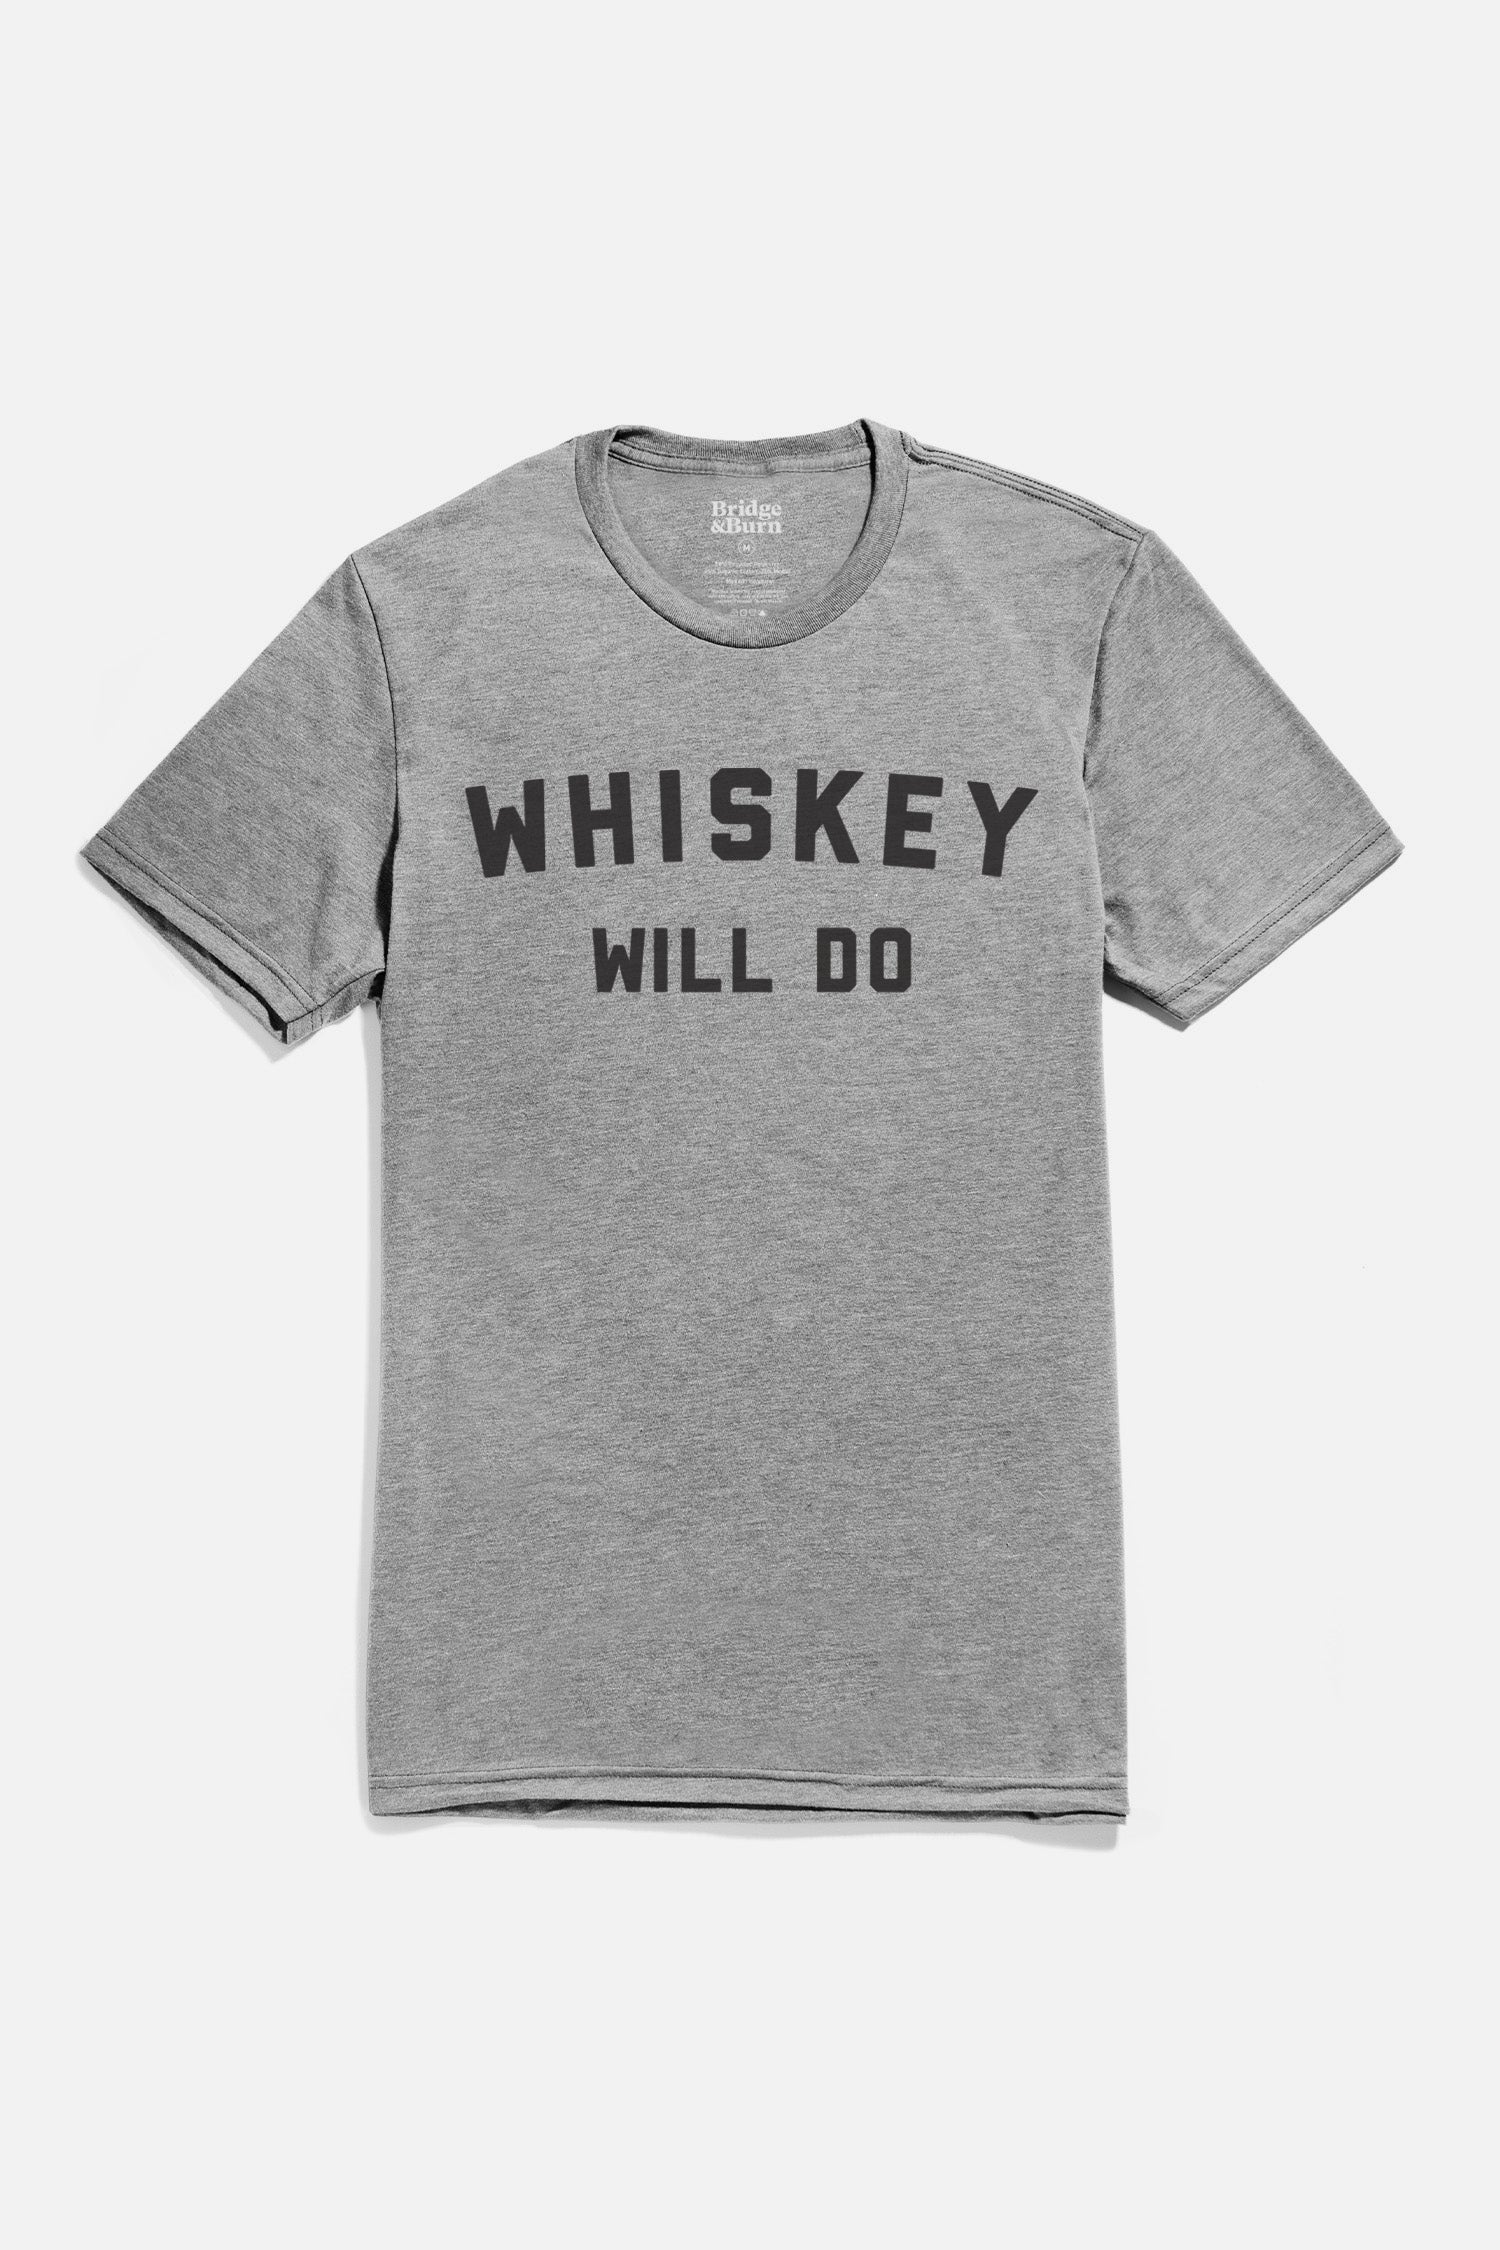 Men's Whiskey Will Do Tee / Grey